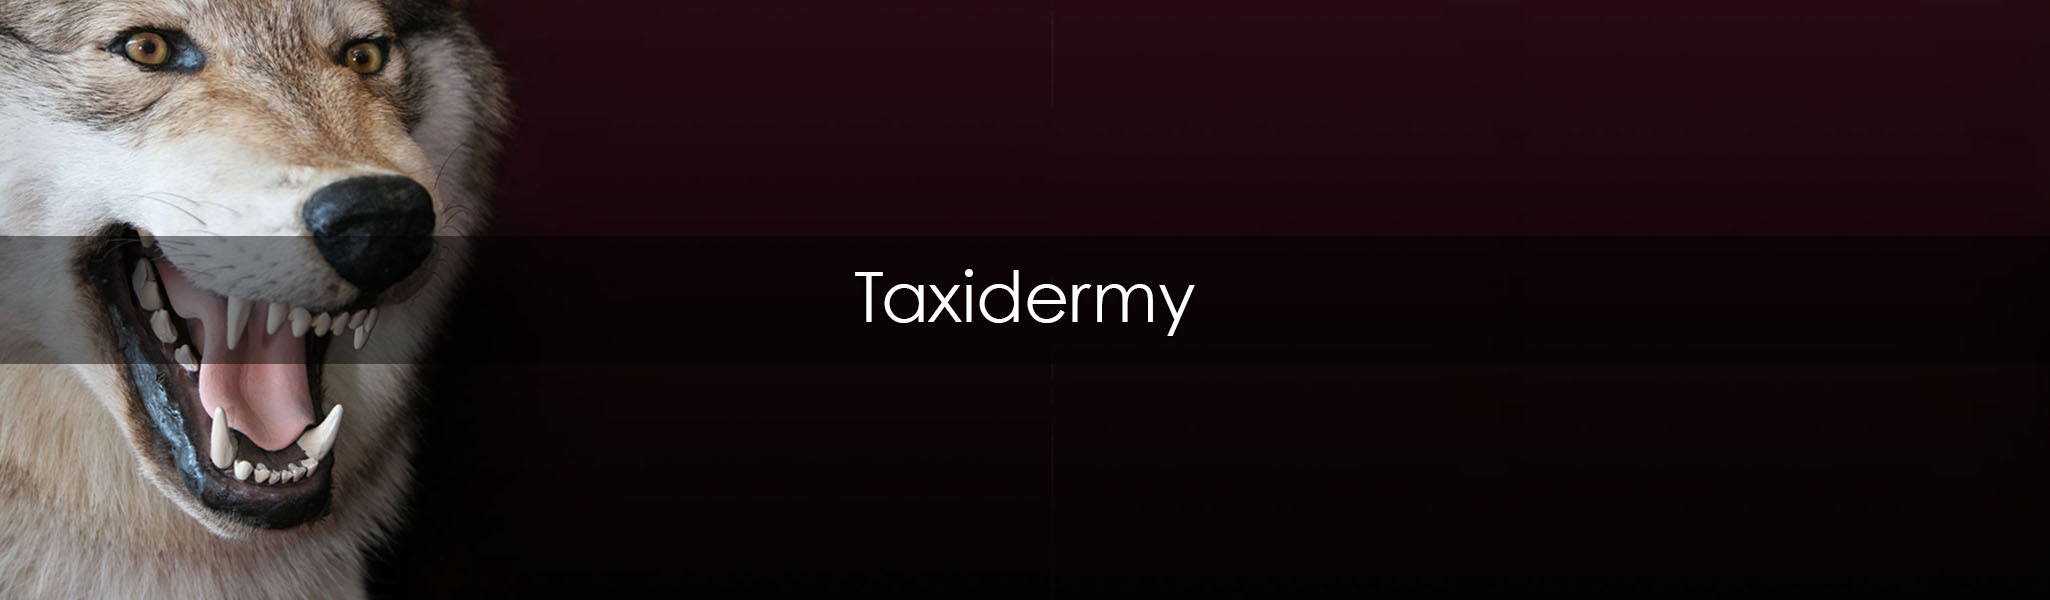 Taxidermy - 2050x600 interior sliders